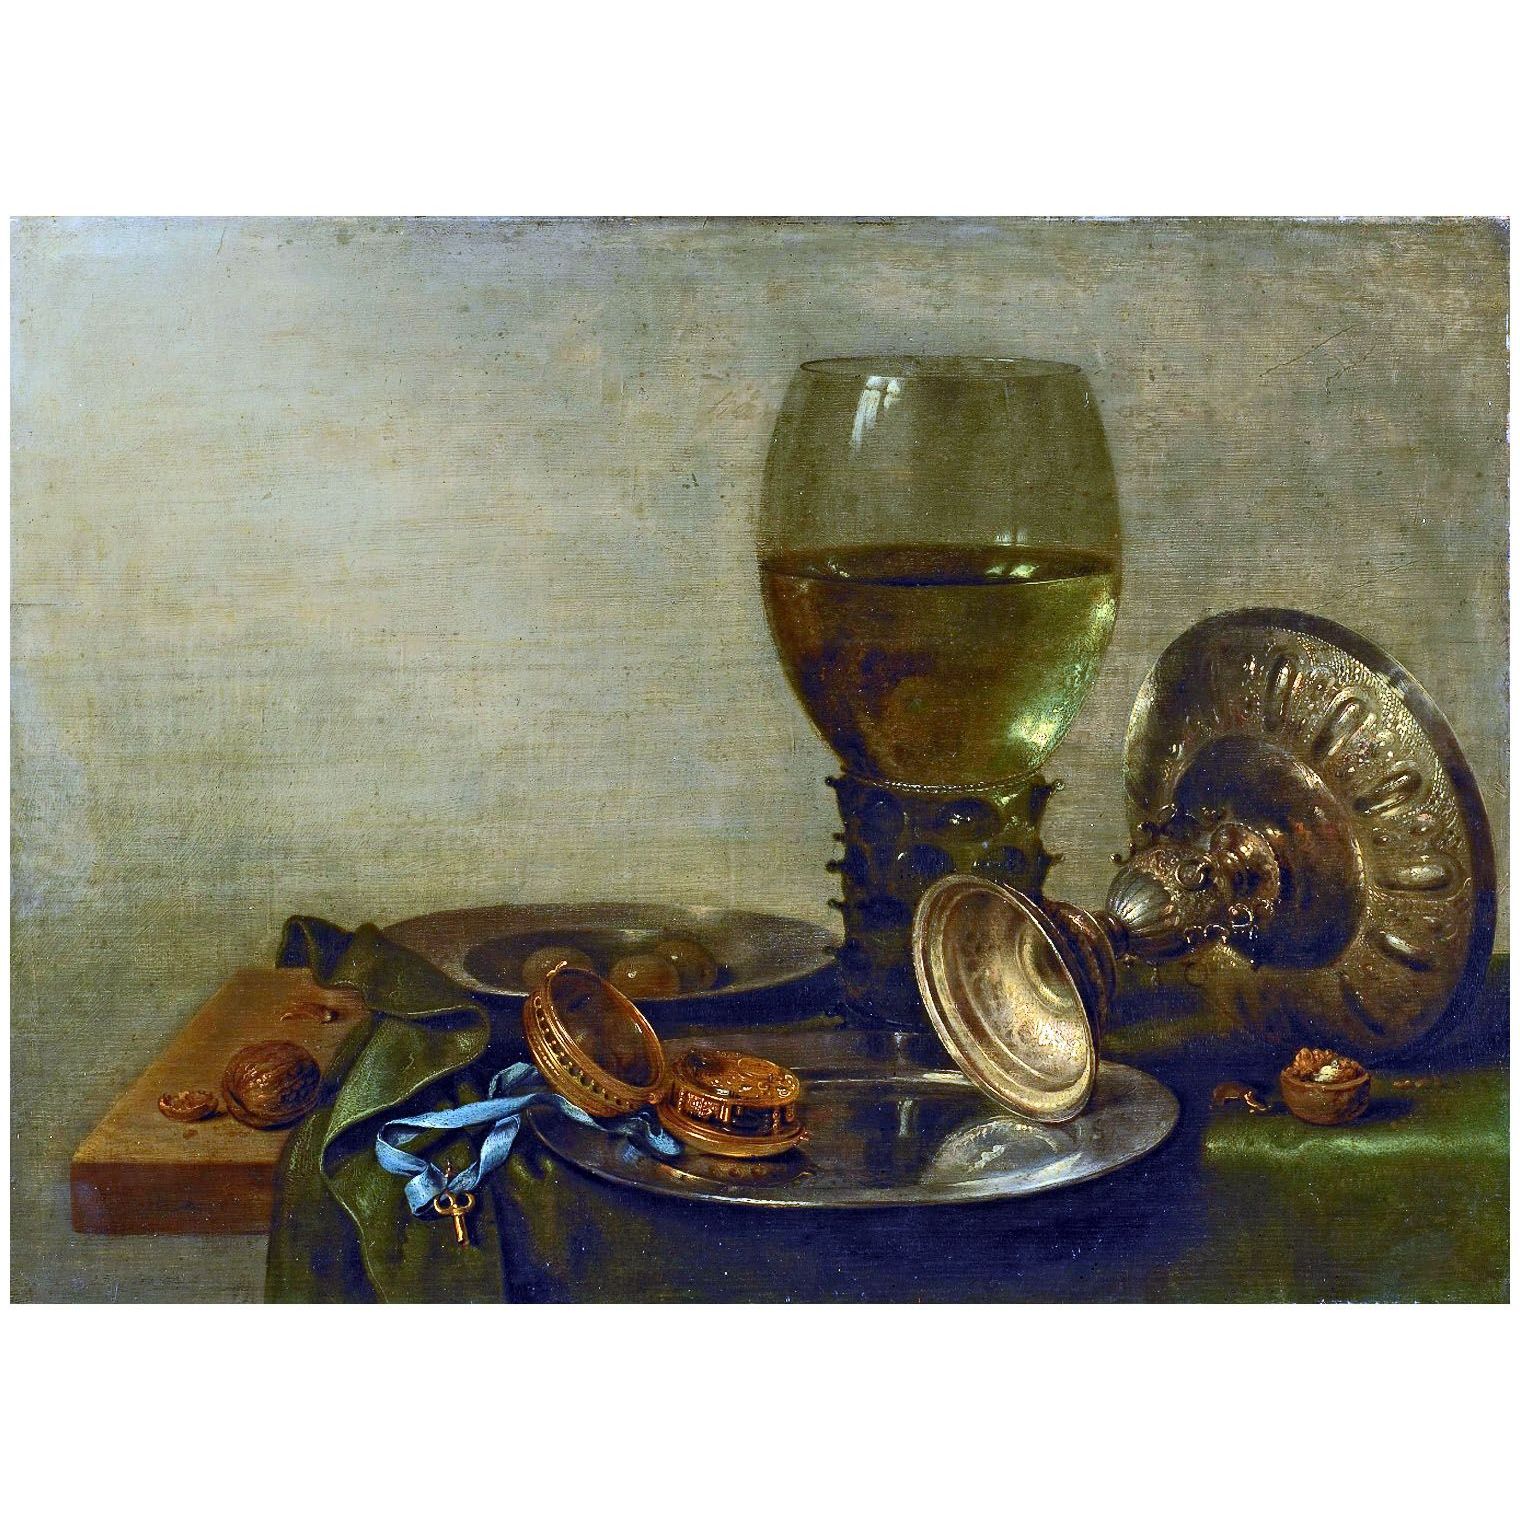 Willem Claesz Heda. Still-Life with a Silver Tazza. 1630. Rijksmuseum Amsterdam